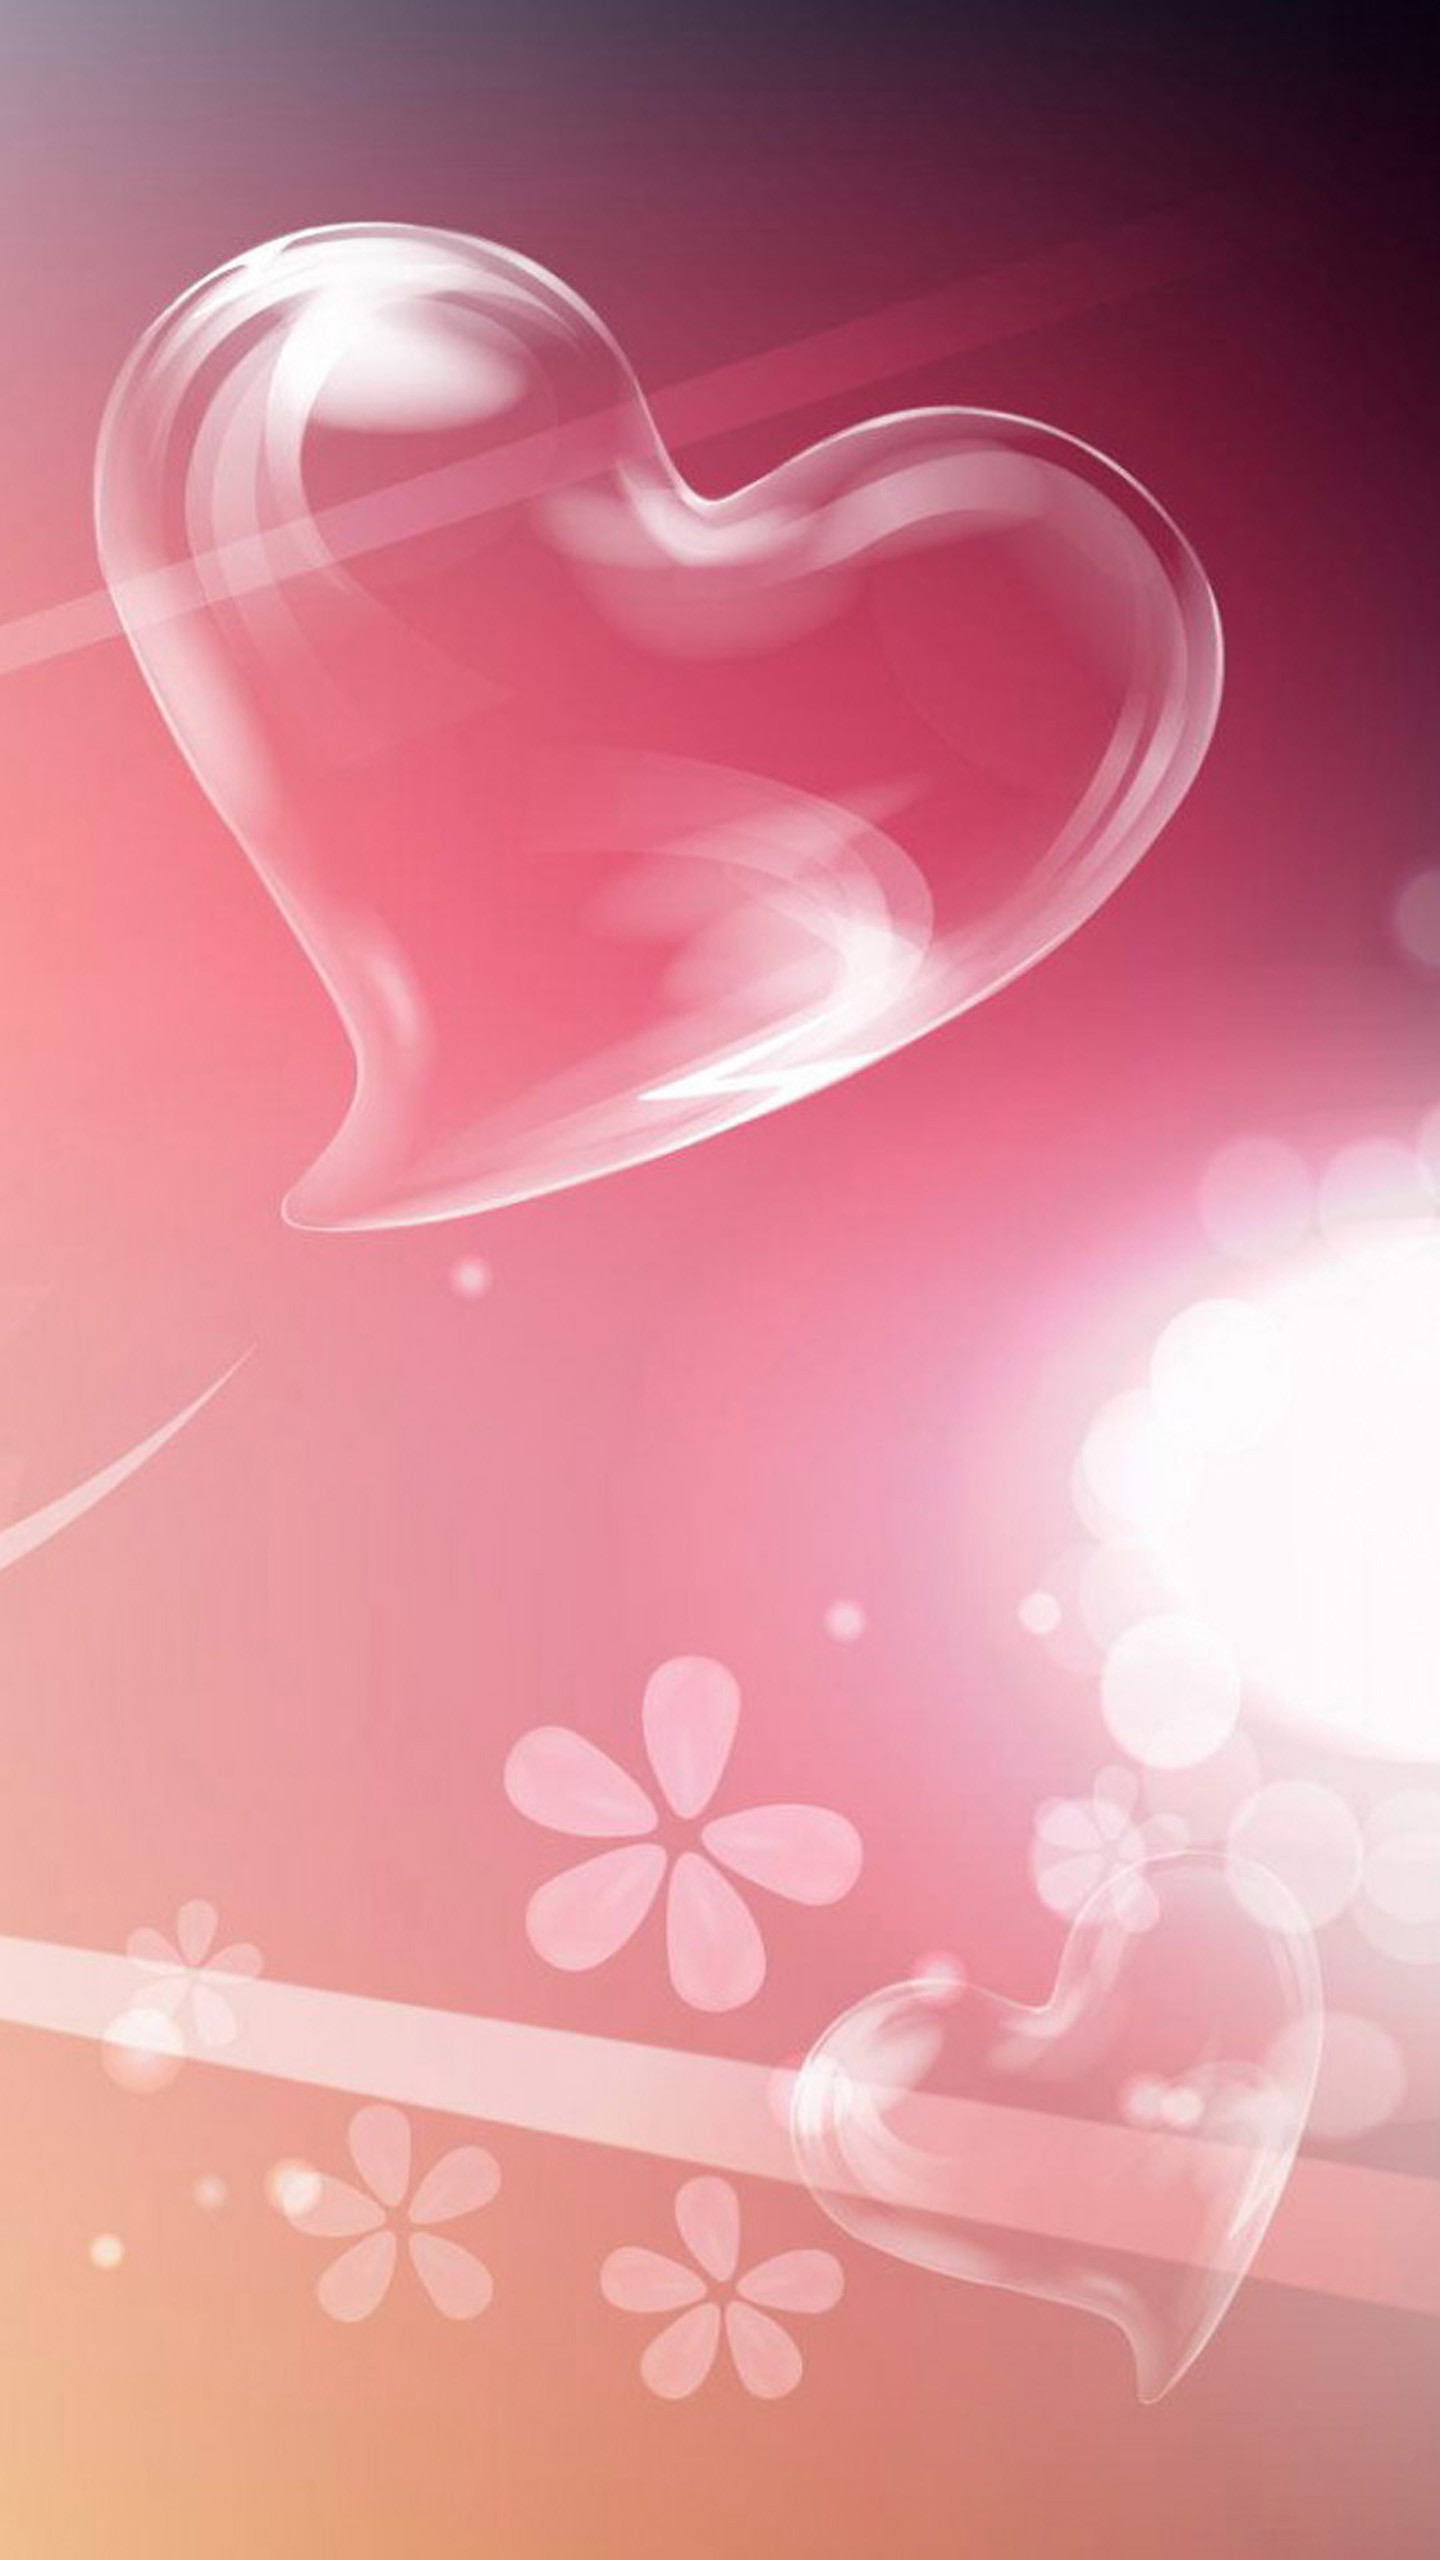 1440x2560, Pink Love Heart Bubble Mobile Wallpaper - Love Wallpapers For  Mobile - 1440x2560 Wallpaper 